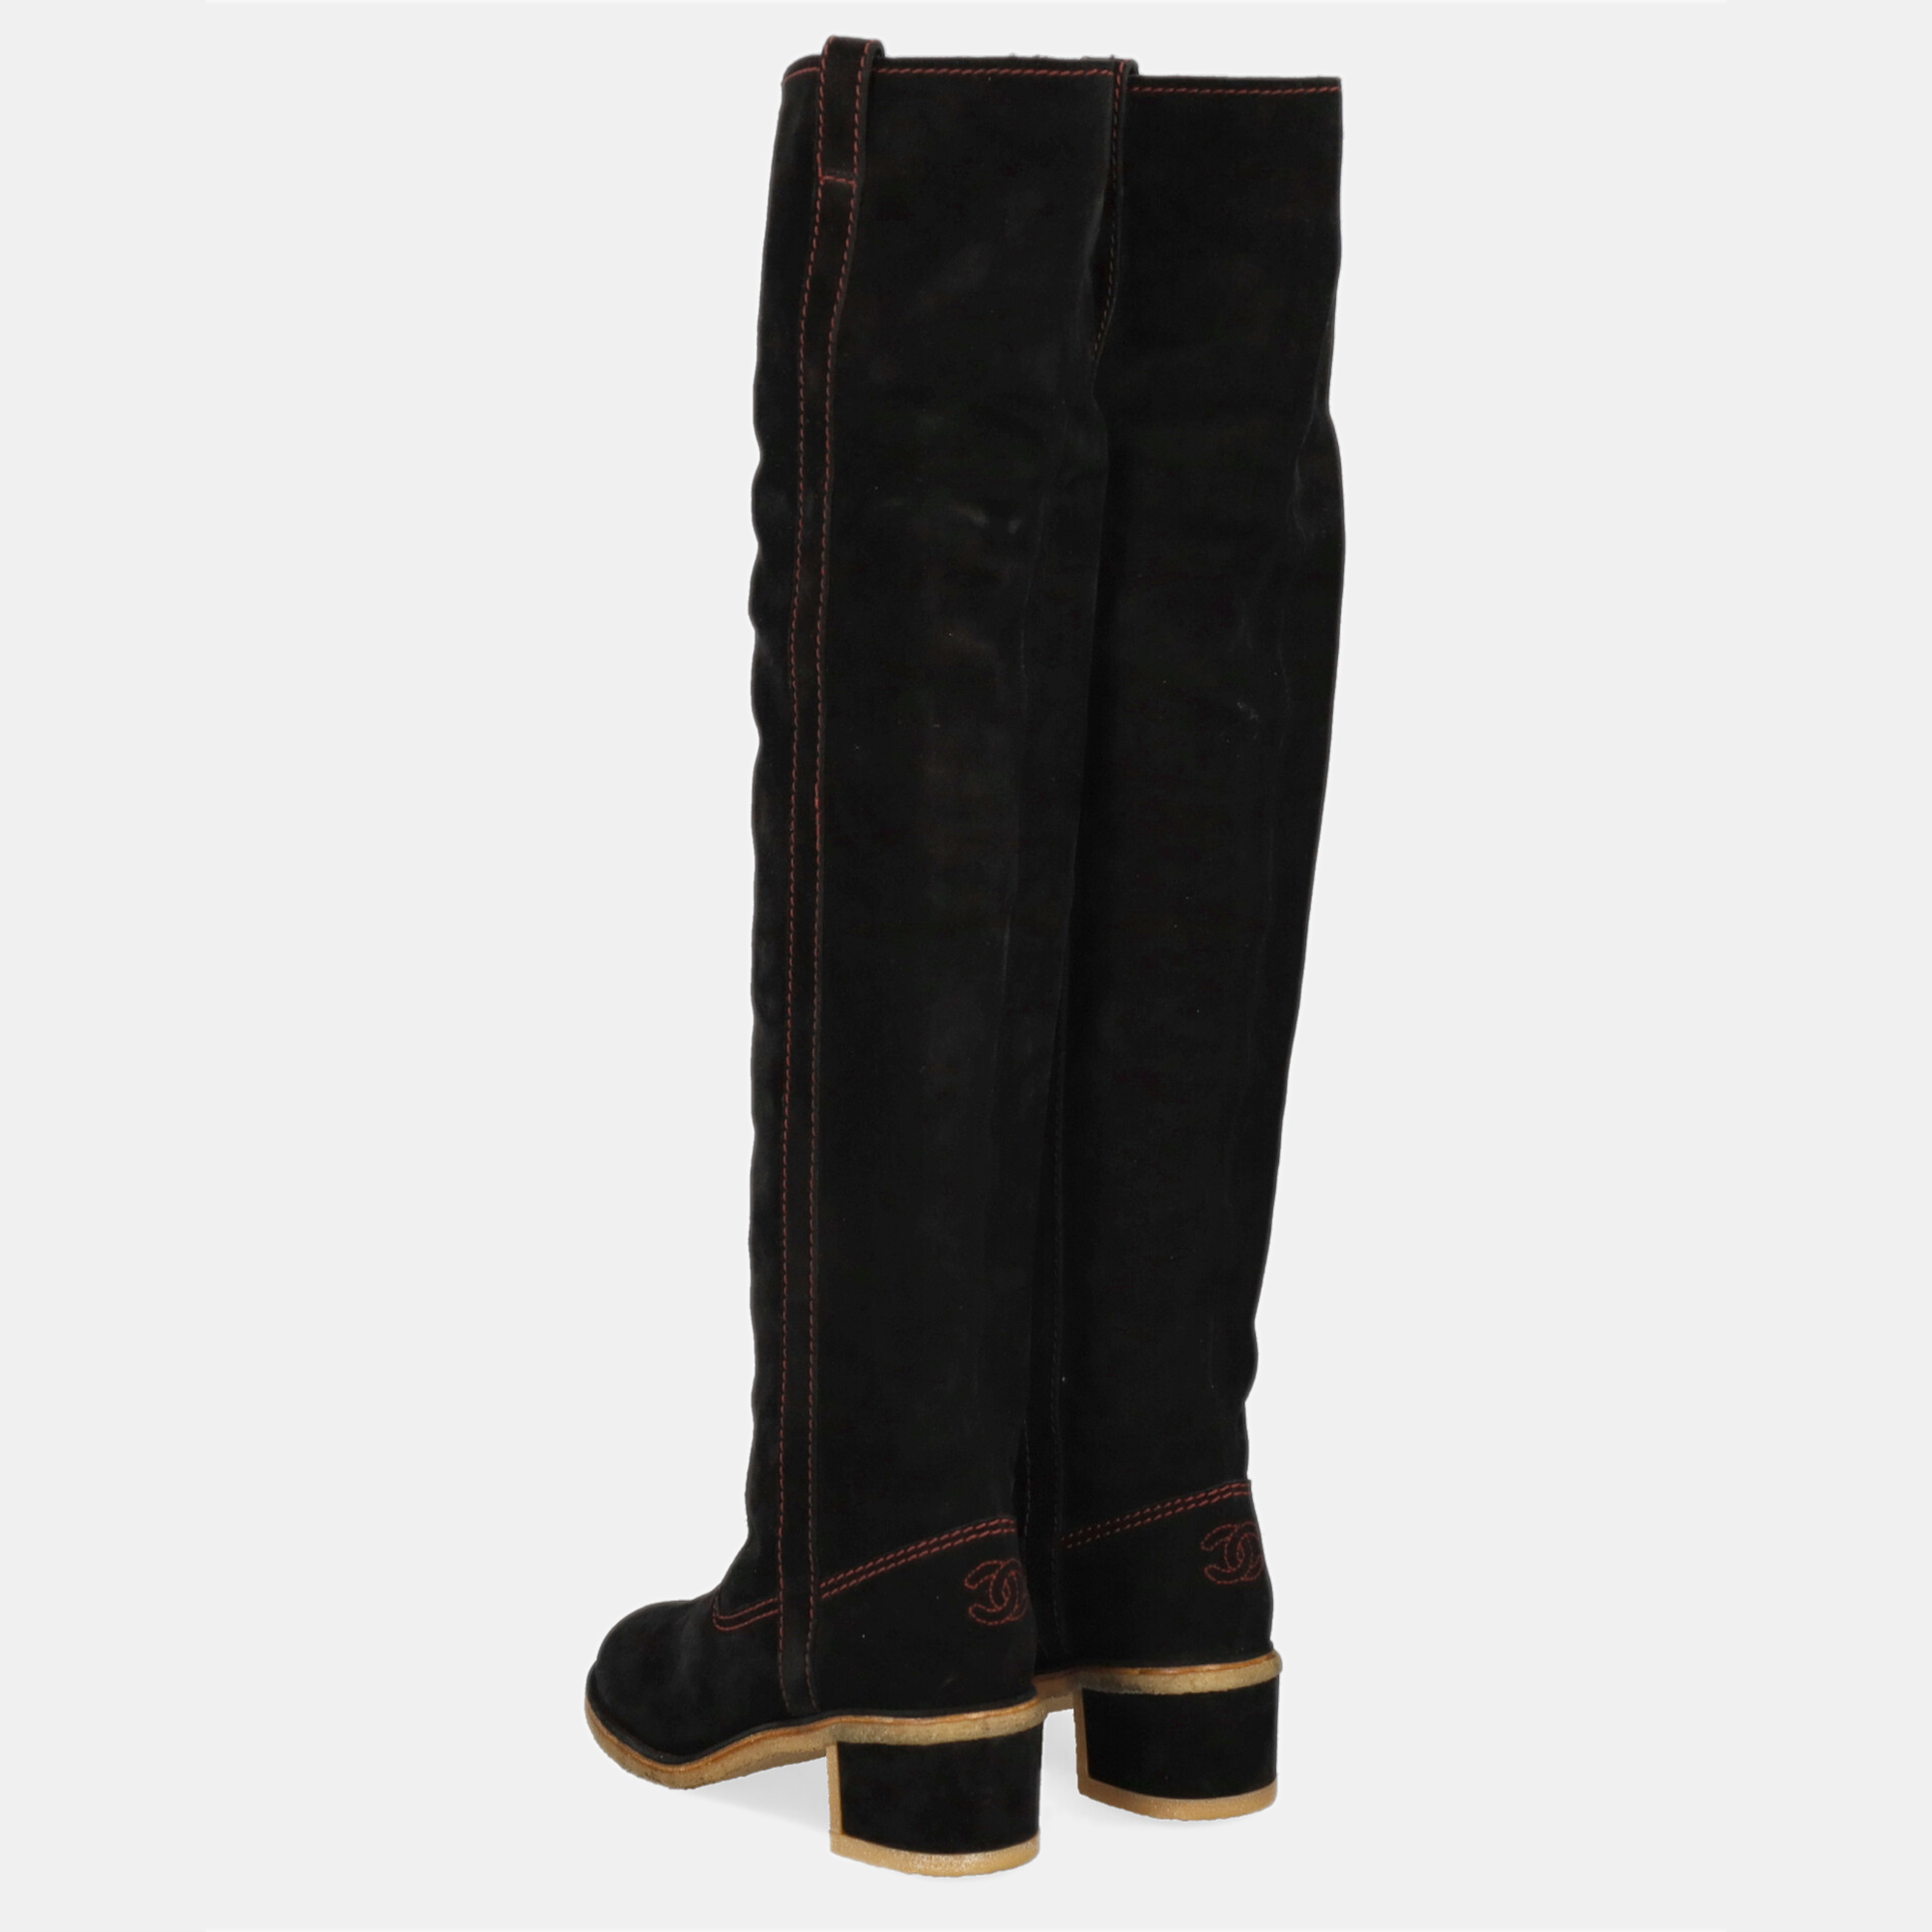 Chanel  Women's Leather Boots - Black - EU 38